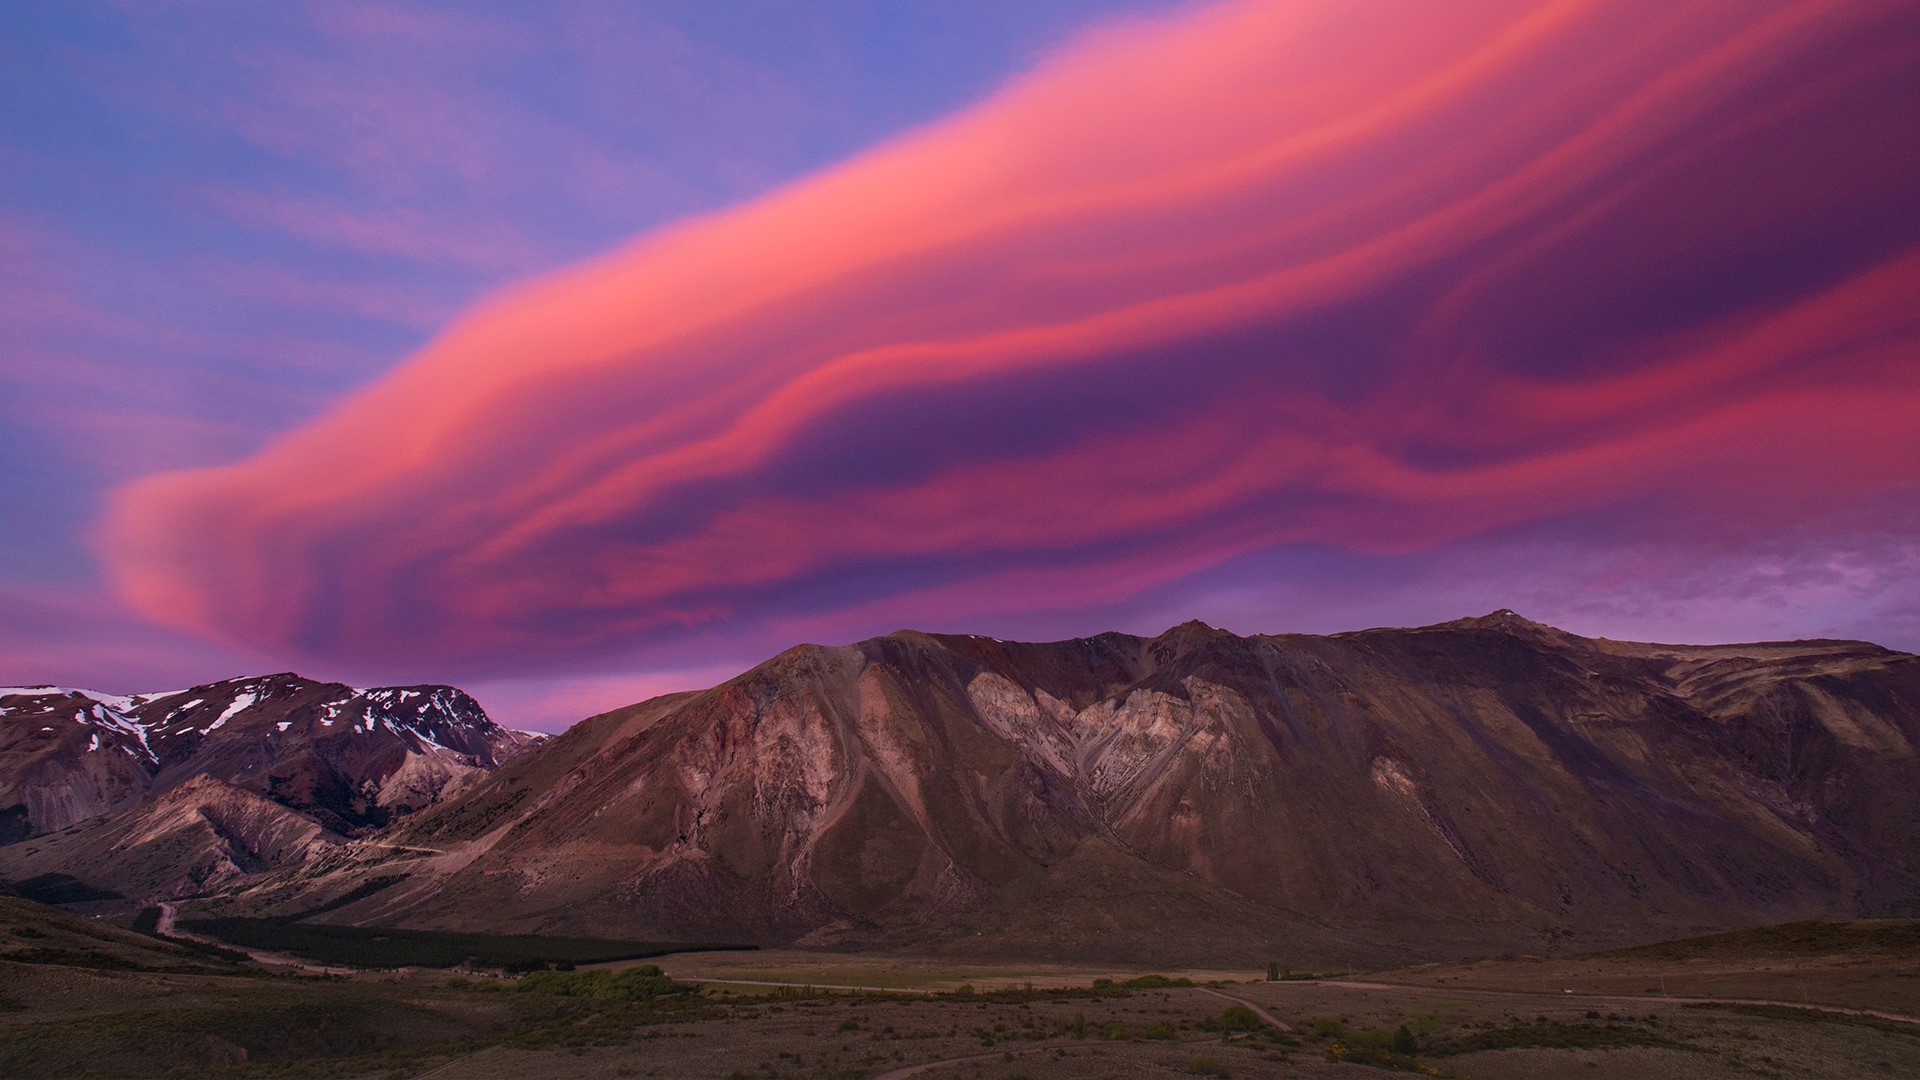 General 1920x1080 nature landscape clouds mountains plants snowy peak road sky pink Argentina